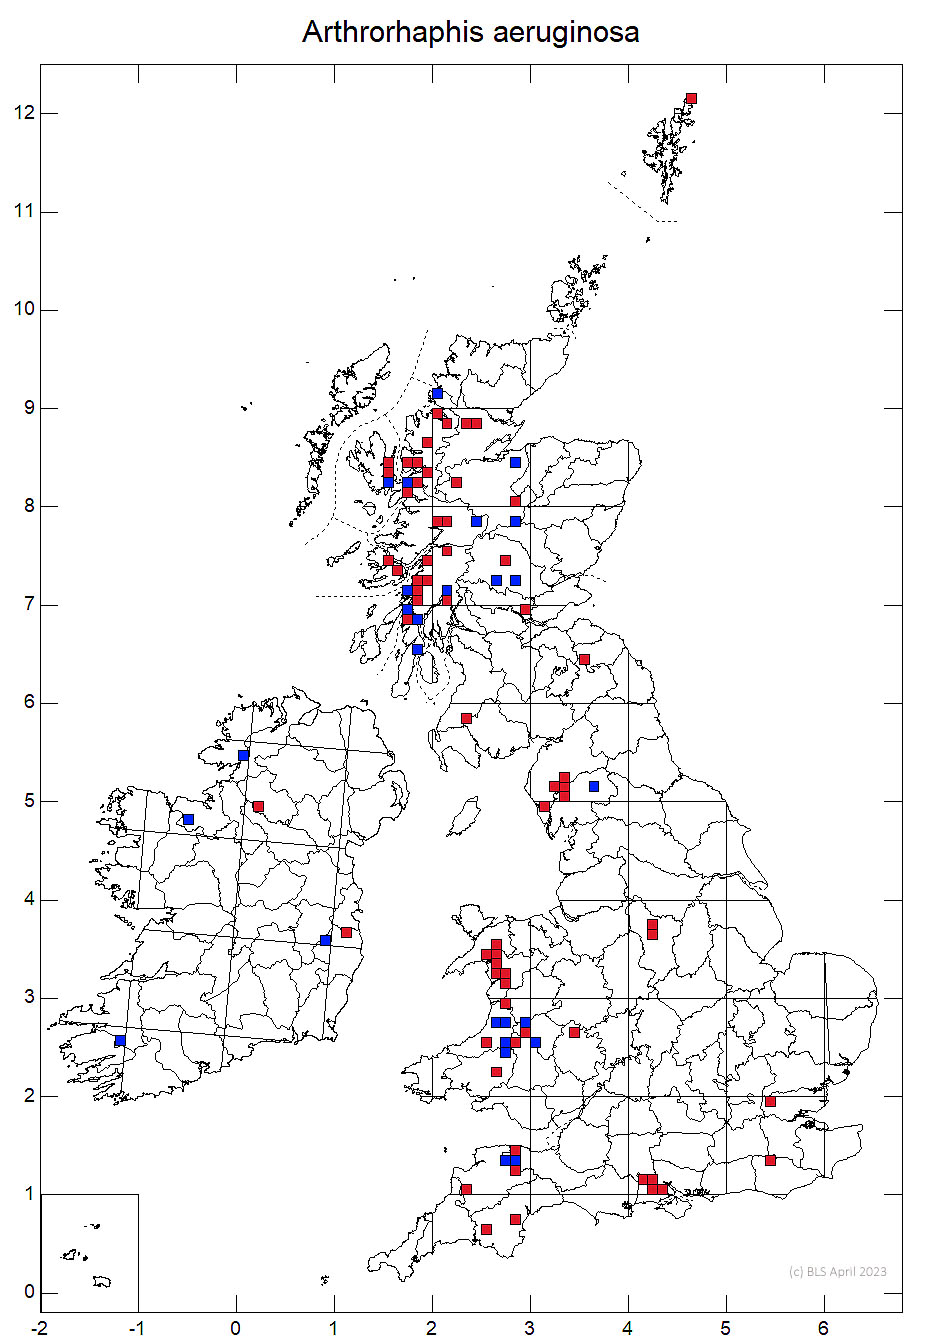 Arthrorhaphis aeruginosa 10km sq distribution map